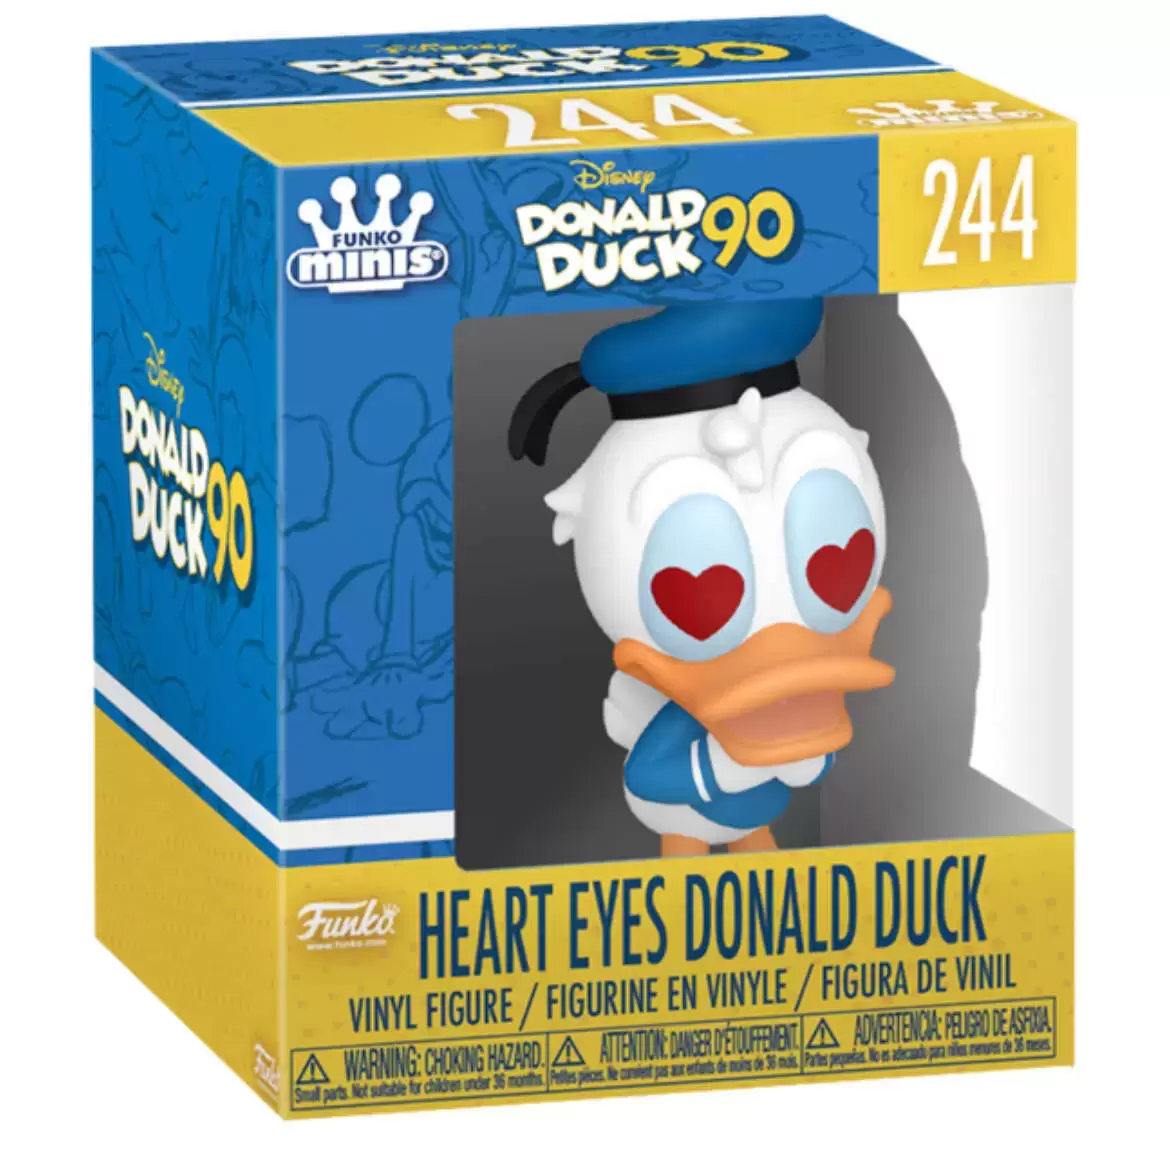 Funko Minis - Donald Duck 90  - Heart Eyes Donald Duck